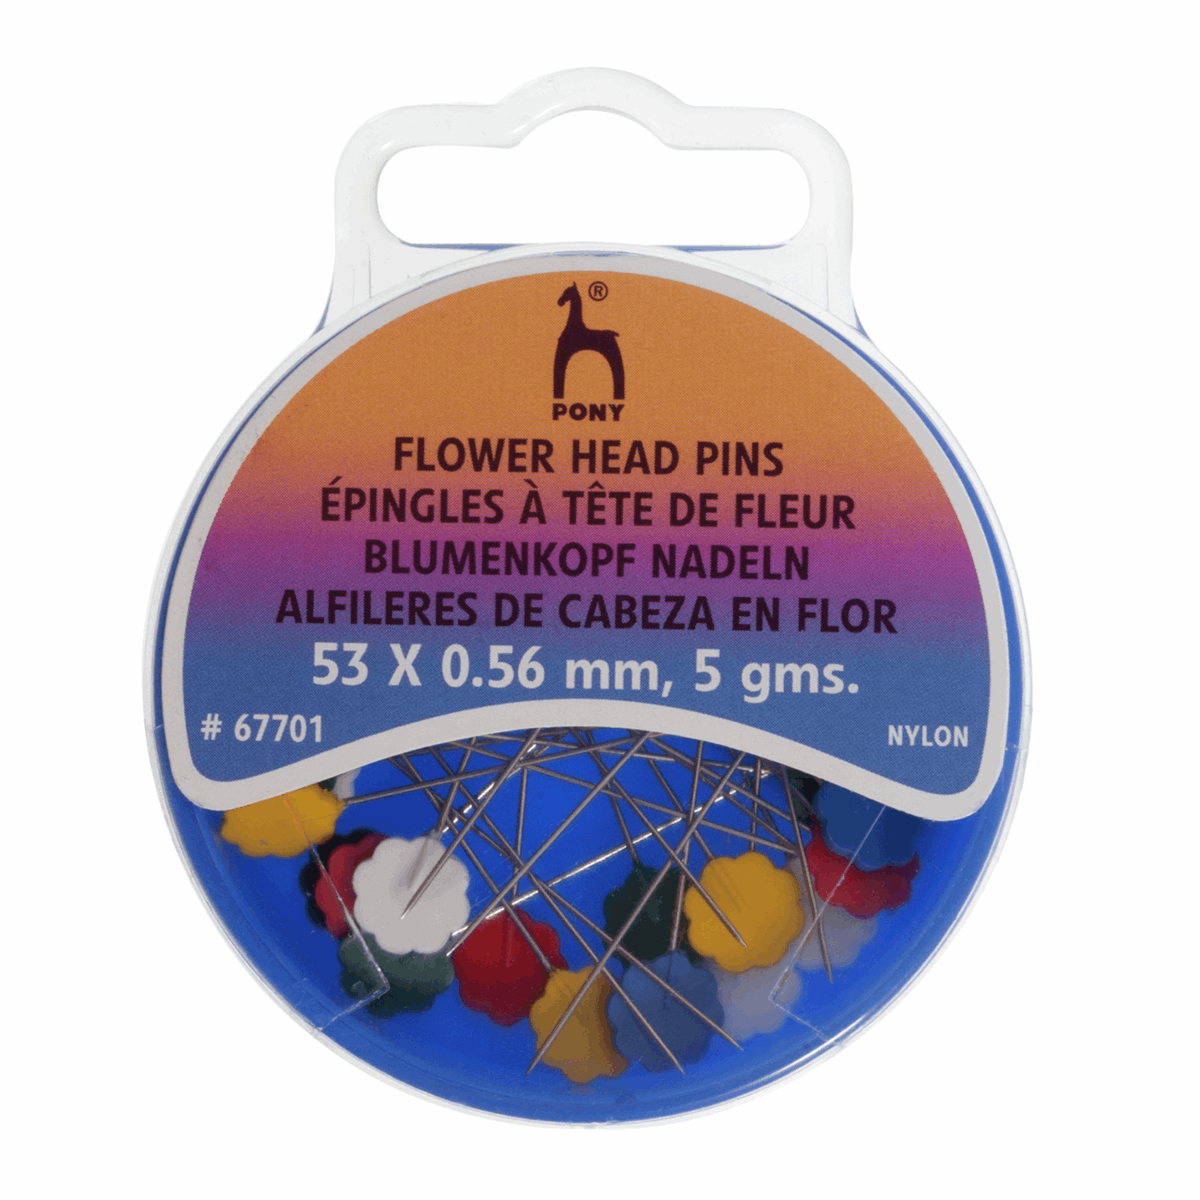 PONY Flower Head Pins